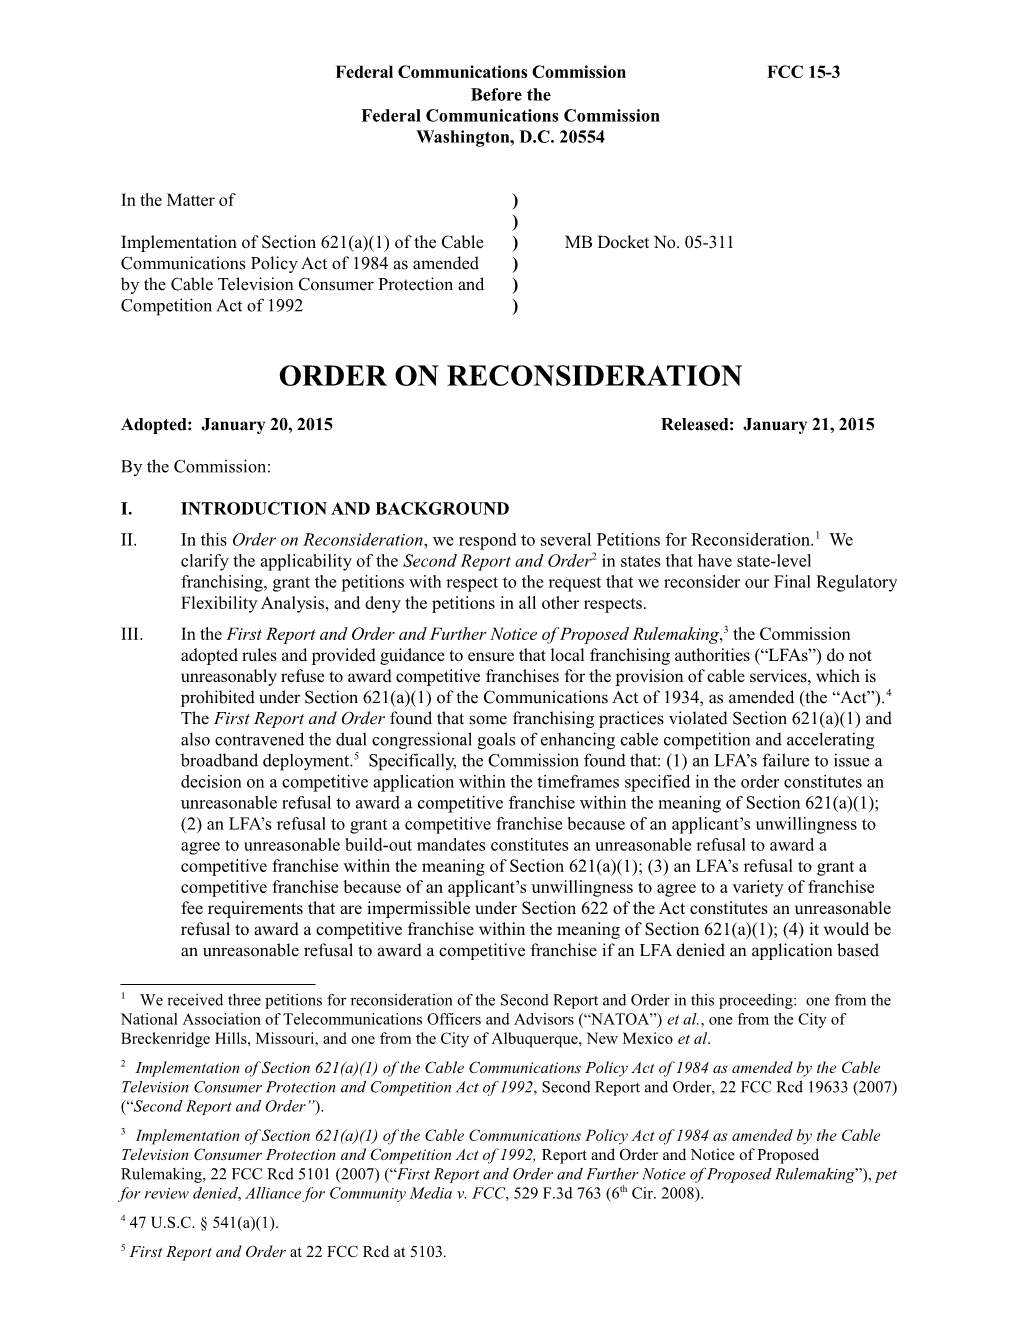 Federal Communications Commission FCC 15-3